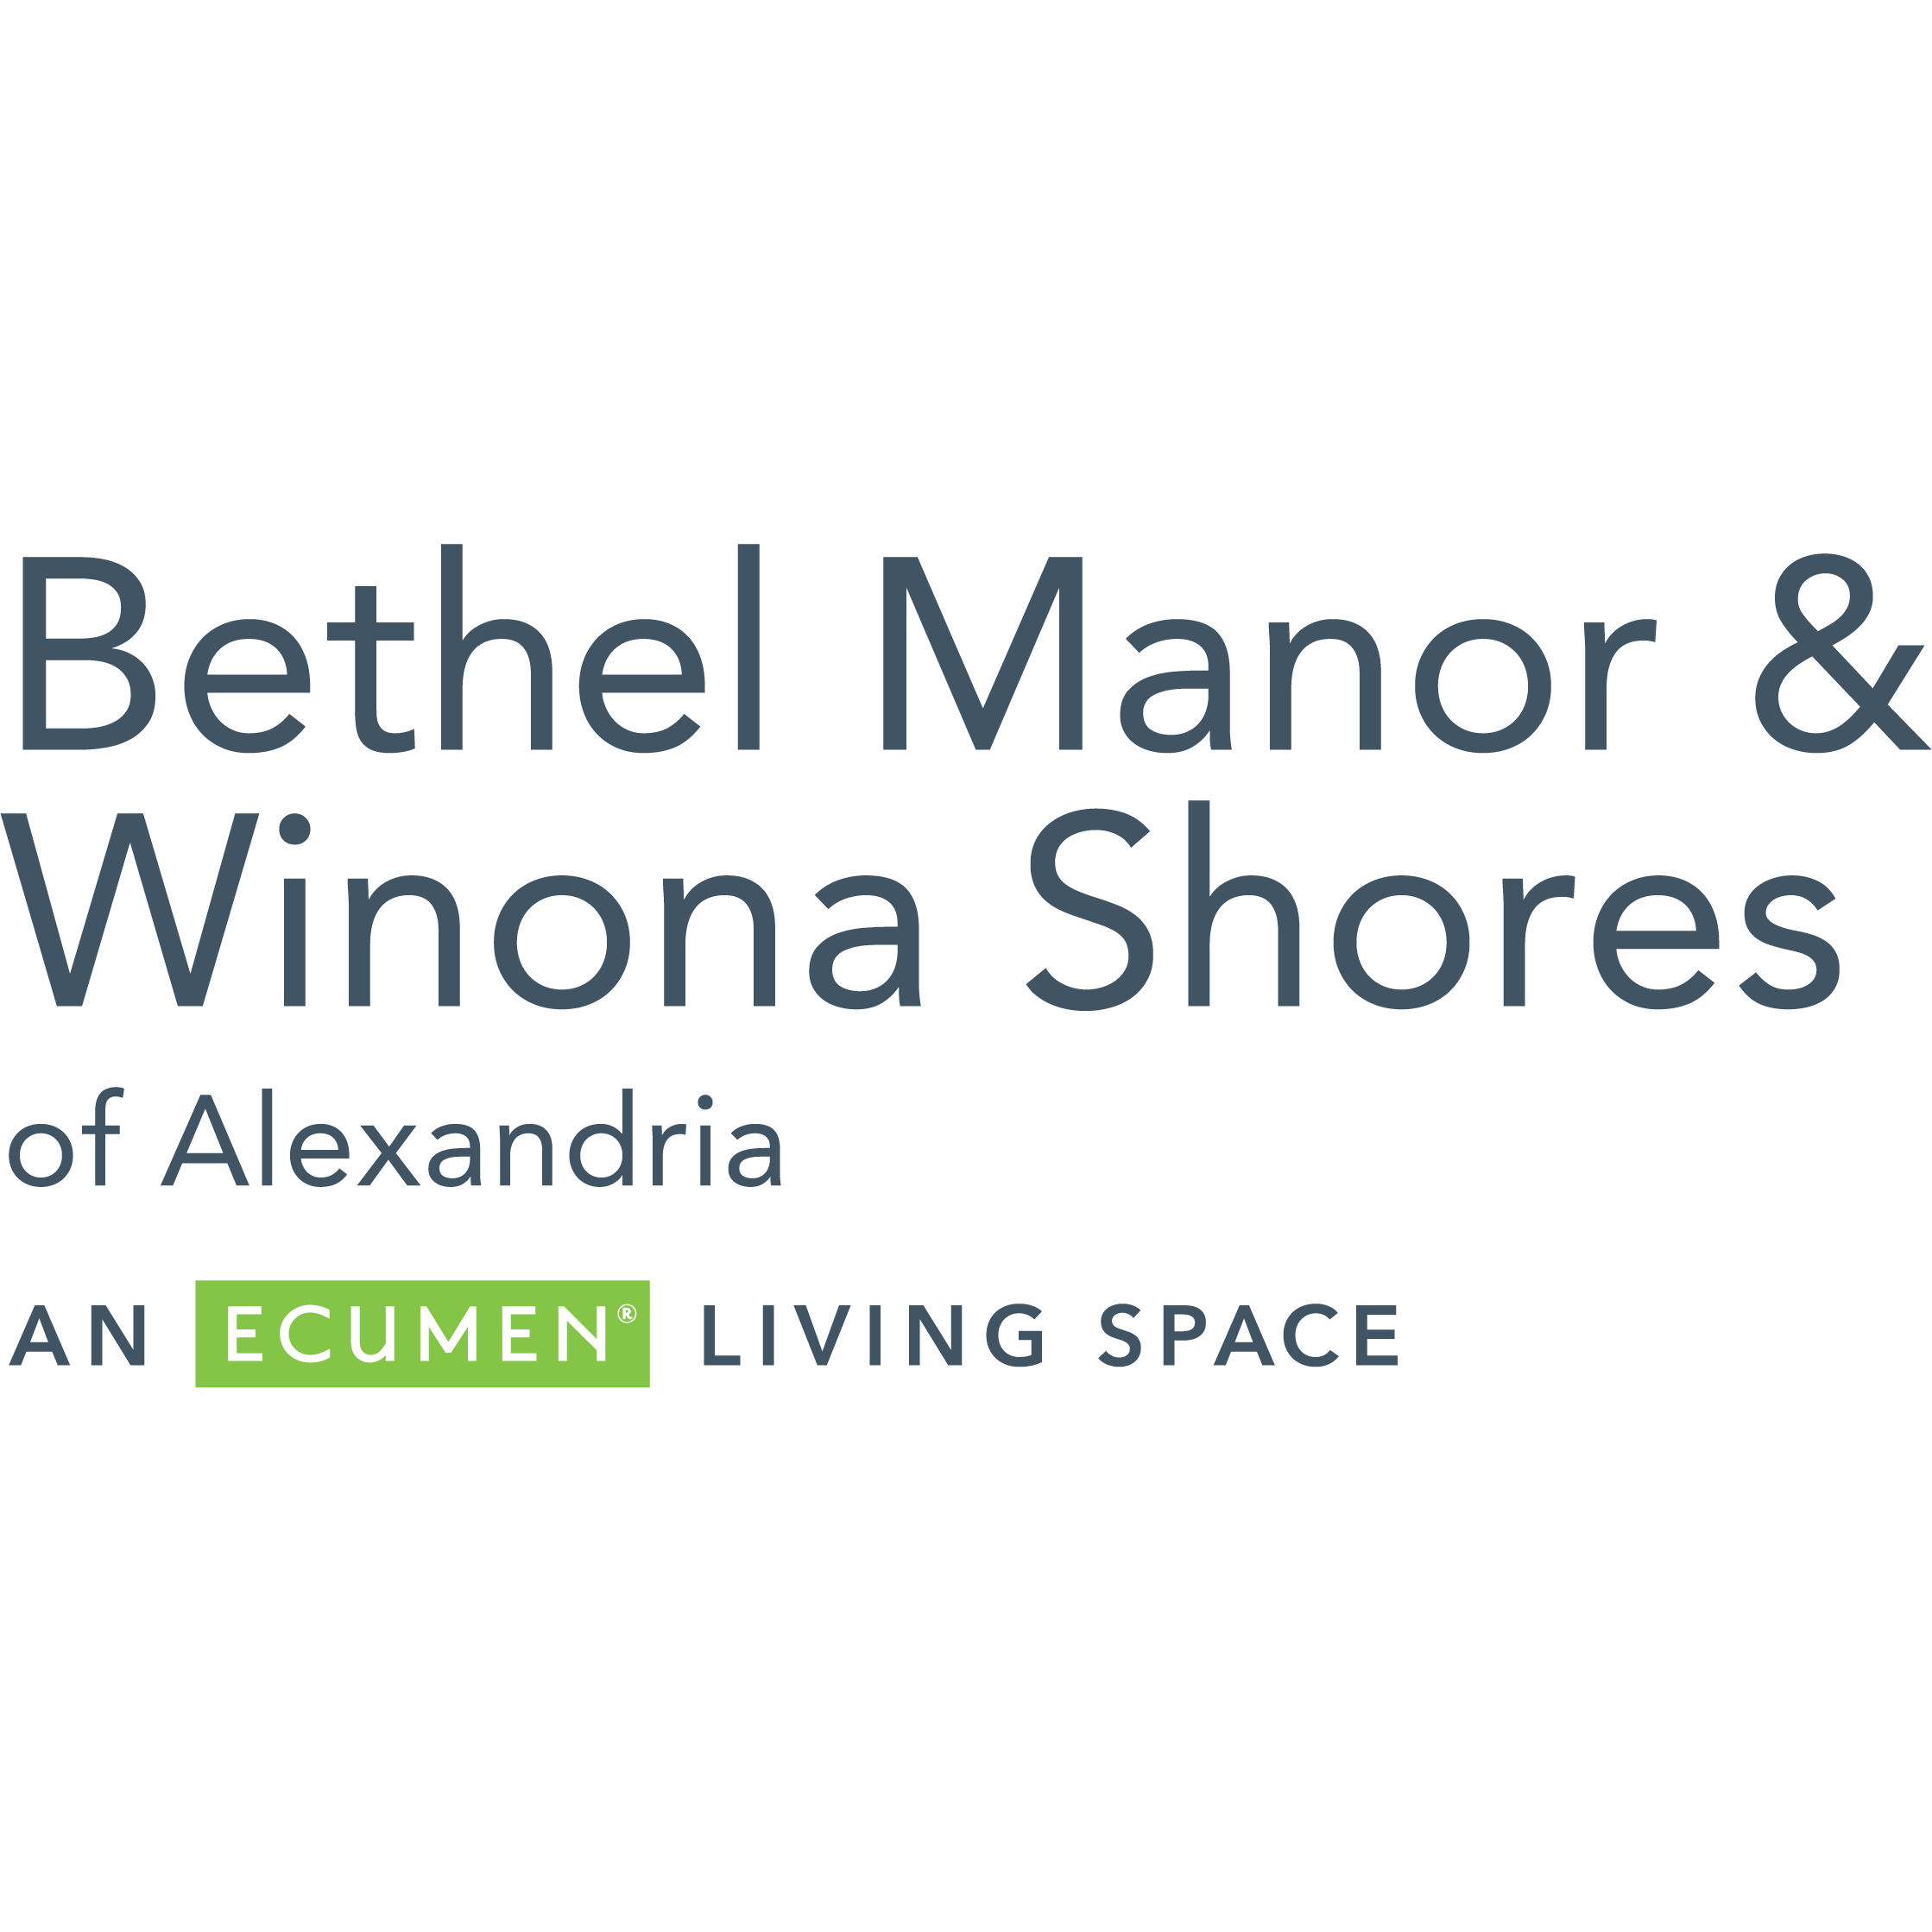 Bethel Manor & Winona Shores | An Ecumen Living Space